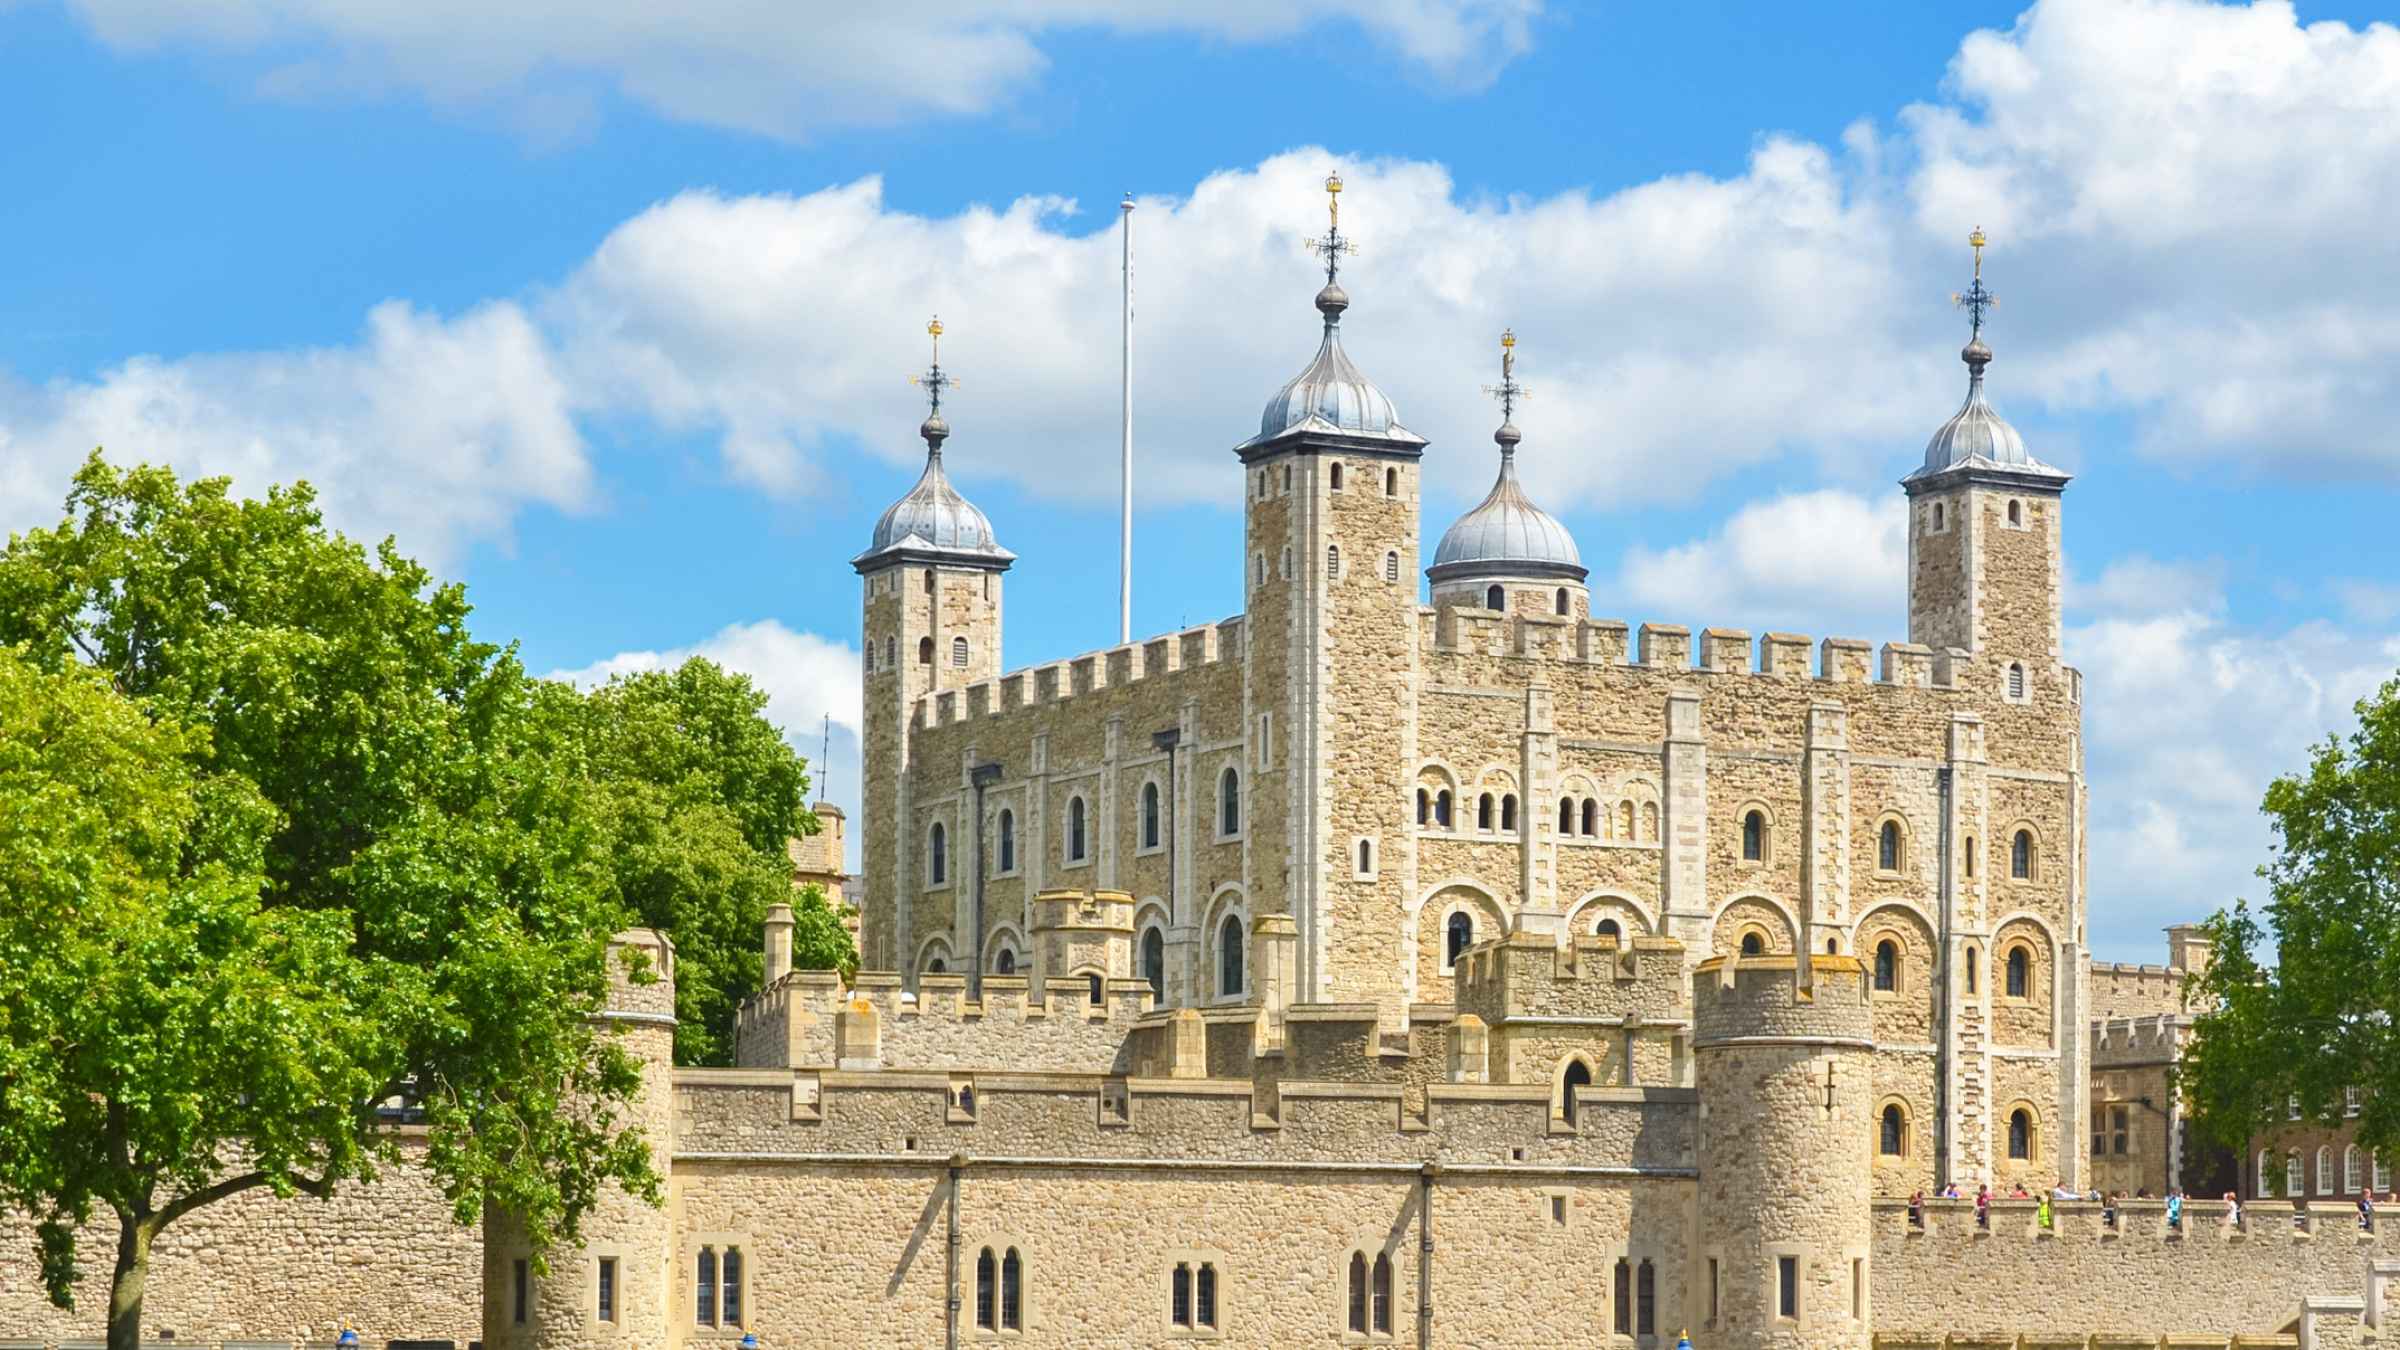 Tower of London - Londyn: Zdobądź bilety | GetYourGuide